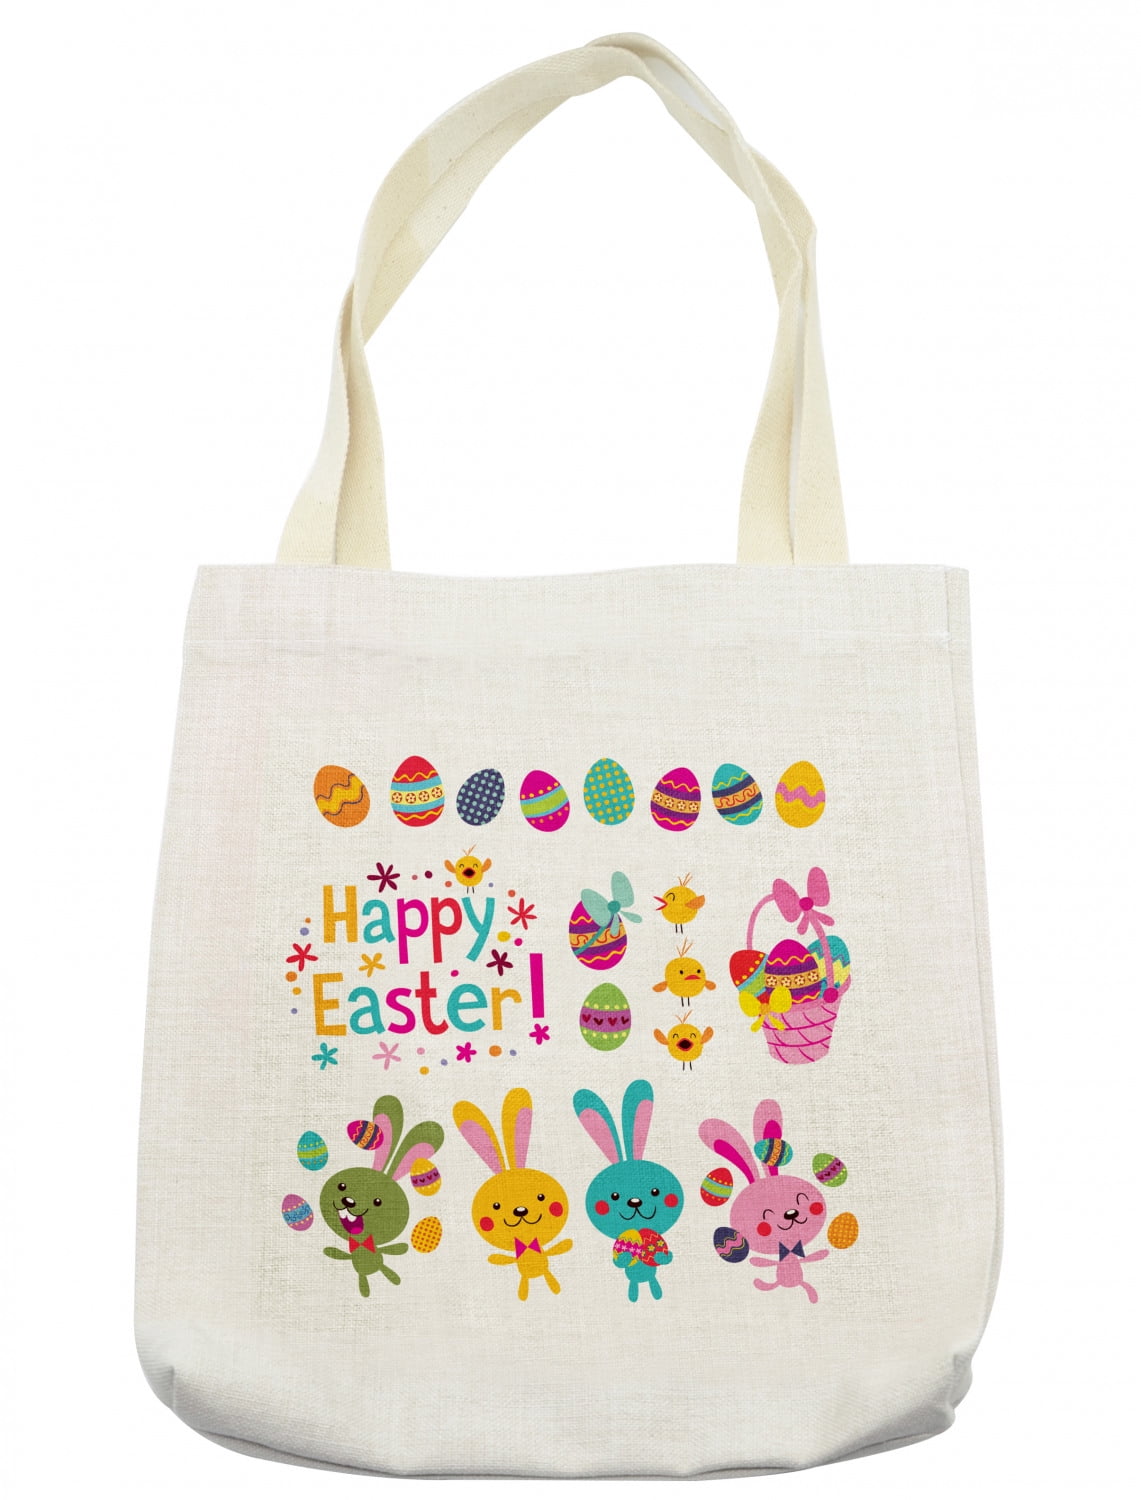 Easter Tote Bag, Spring Season Holiday Themed Colorful Cartoon Bunnies ...